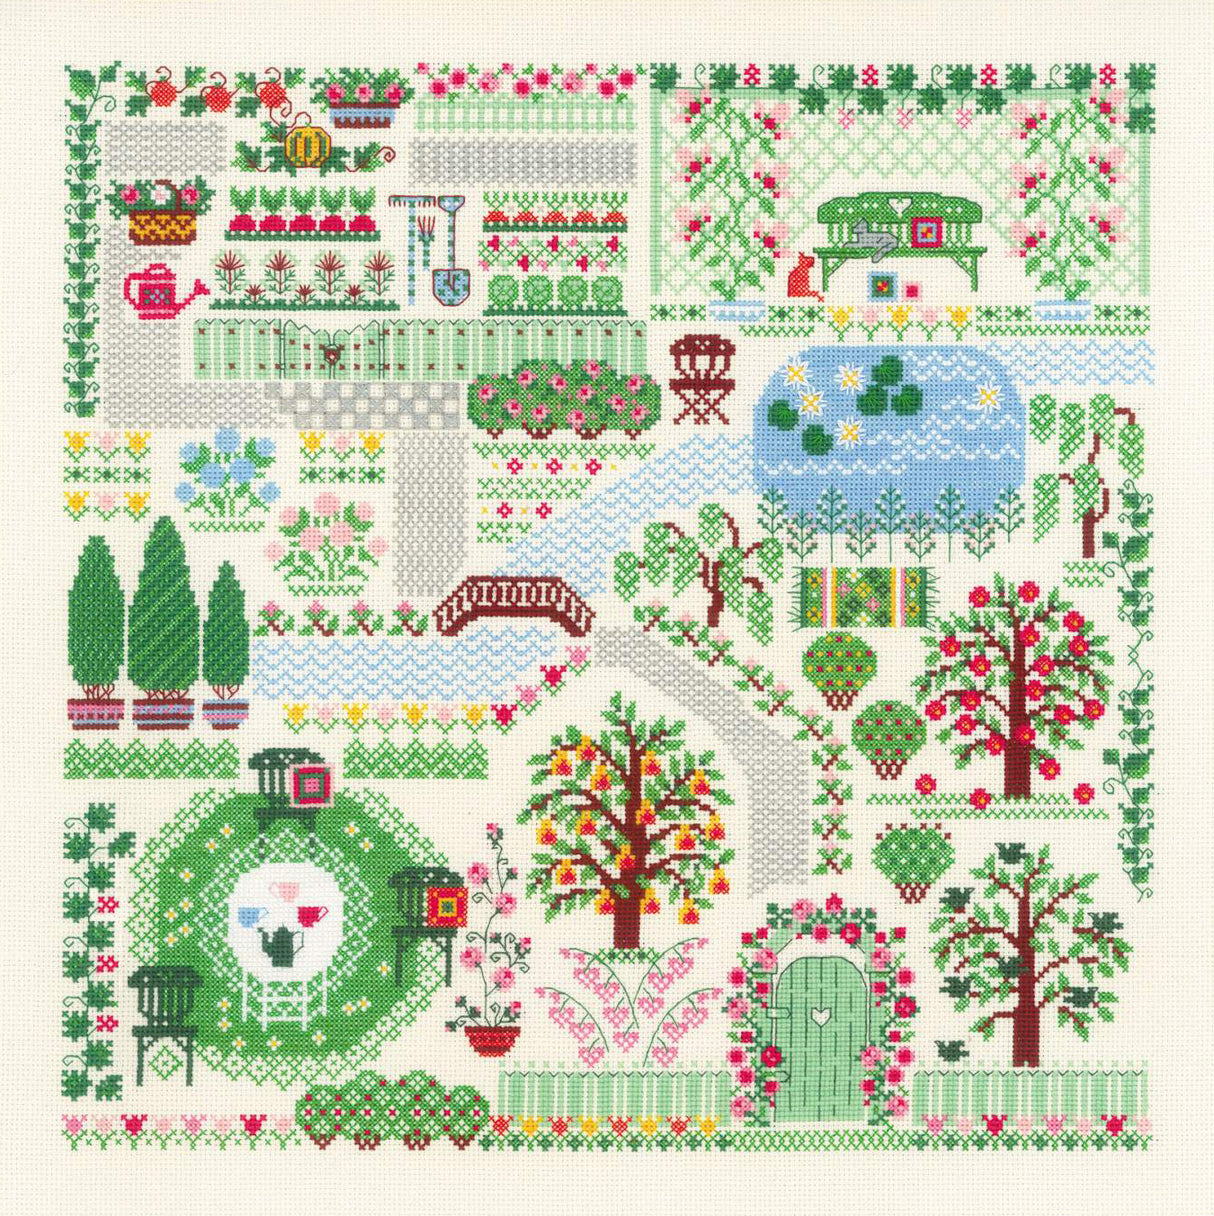 Cross Stitch Embroidery Kit - "My Garden" - Riolis 2047